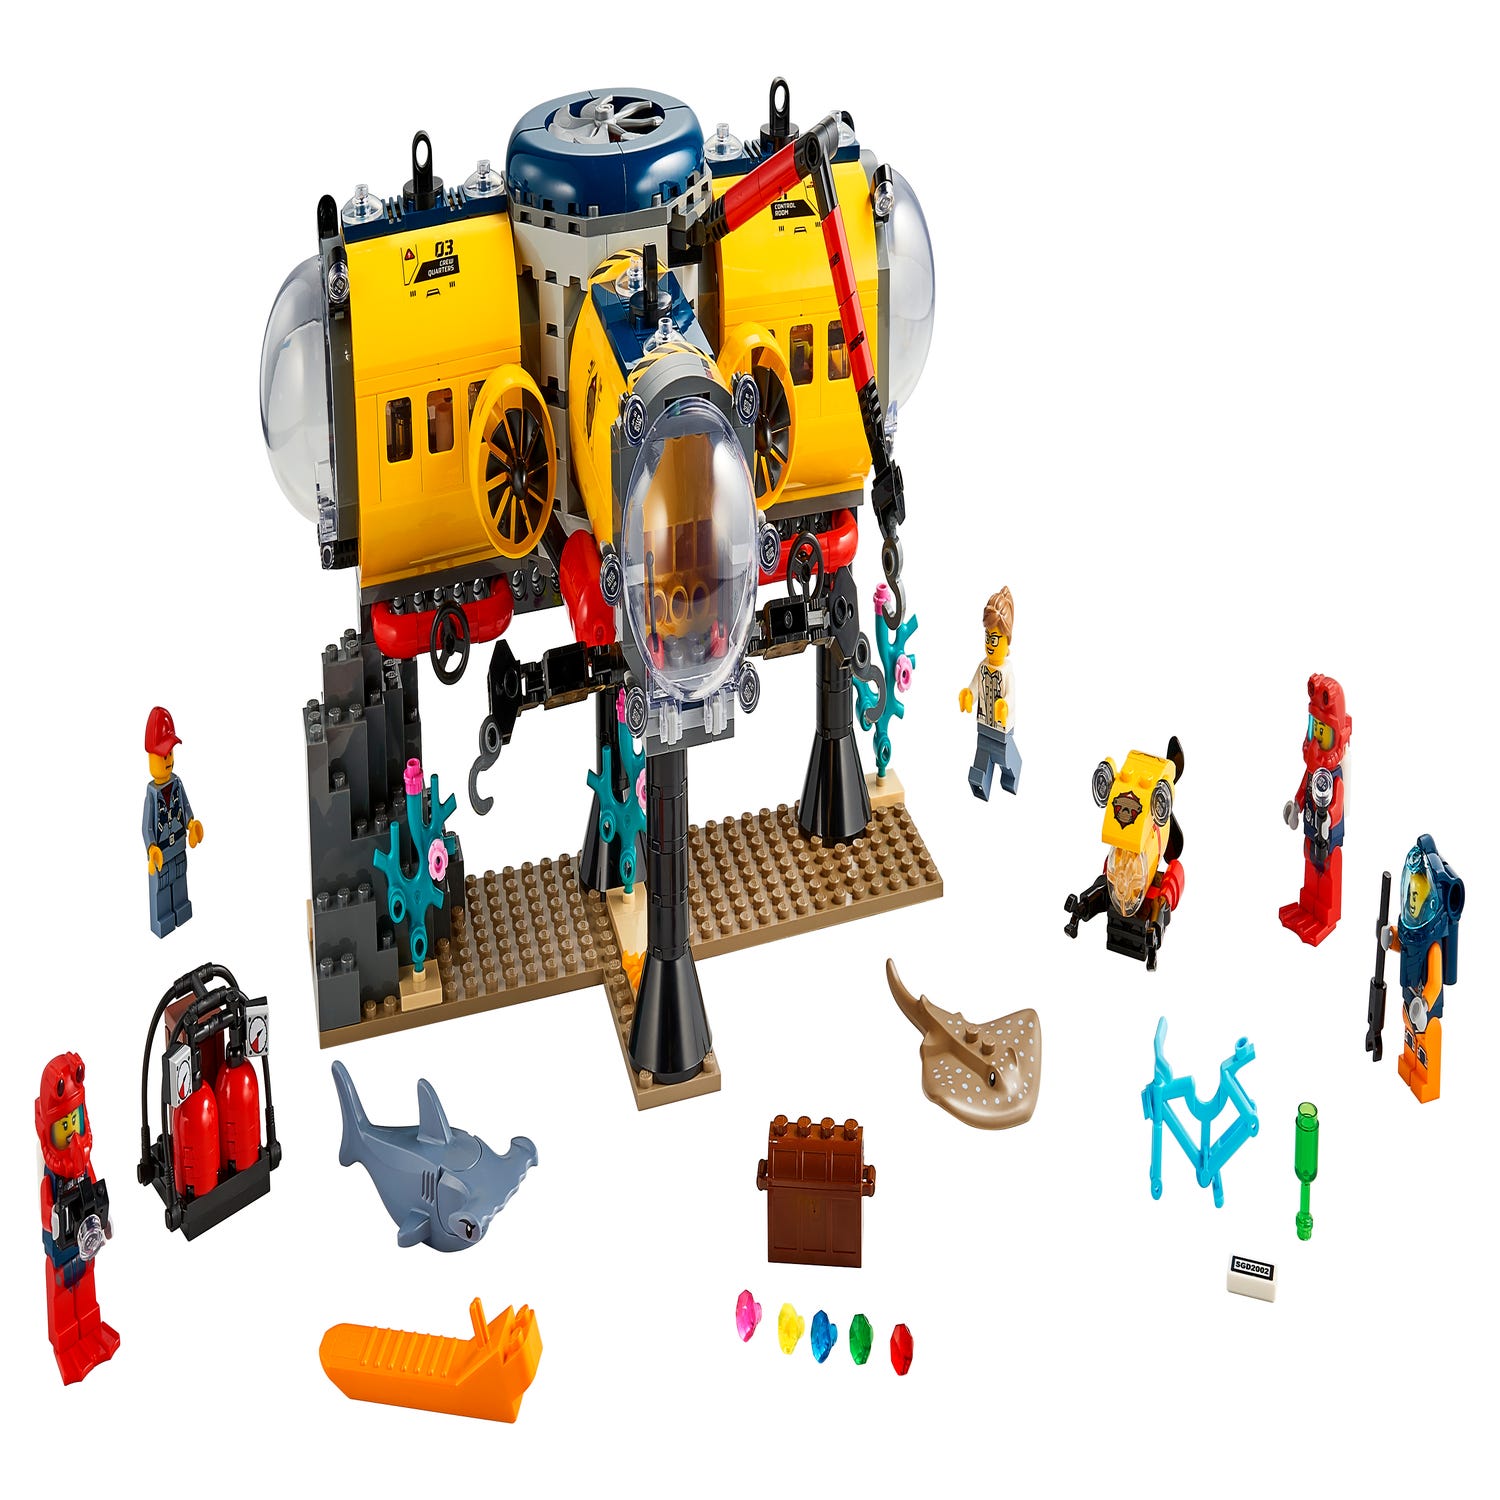 Alstublieft complicaties Rennen Ocean Exploration Base 60265 | City | Buy online at the Official LEGO® Shop  US